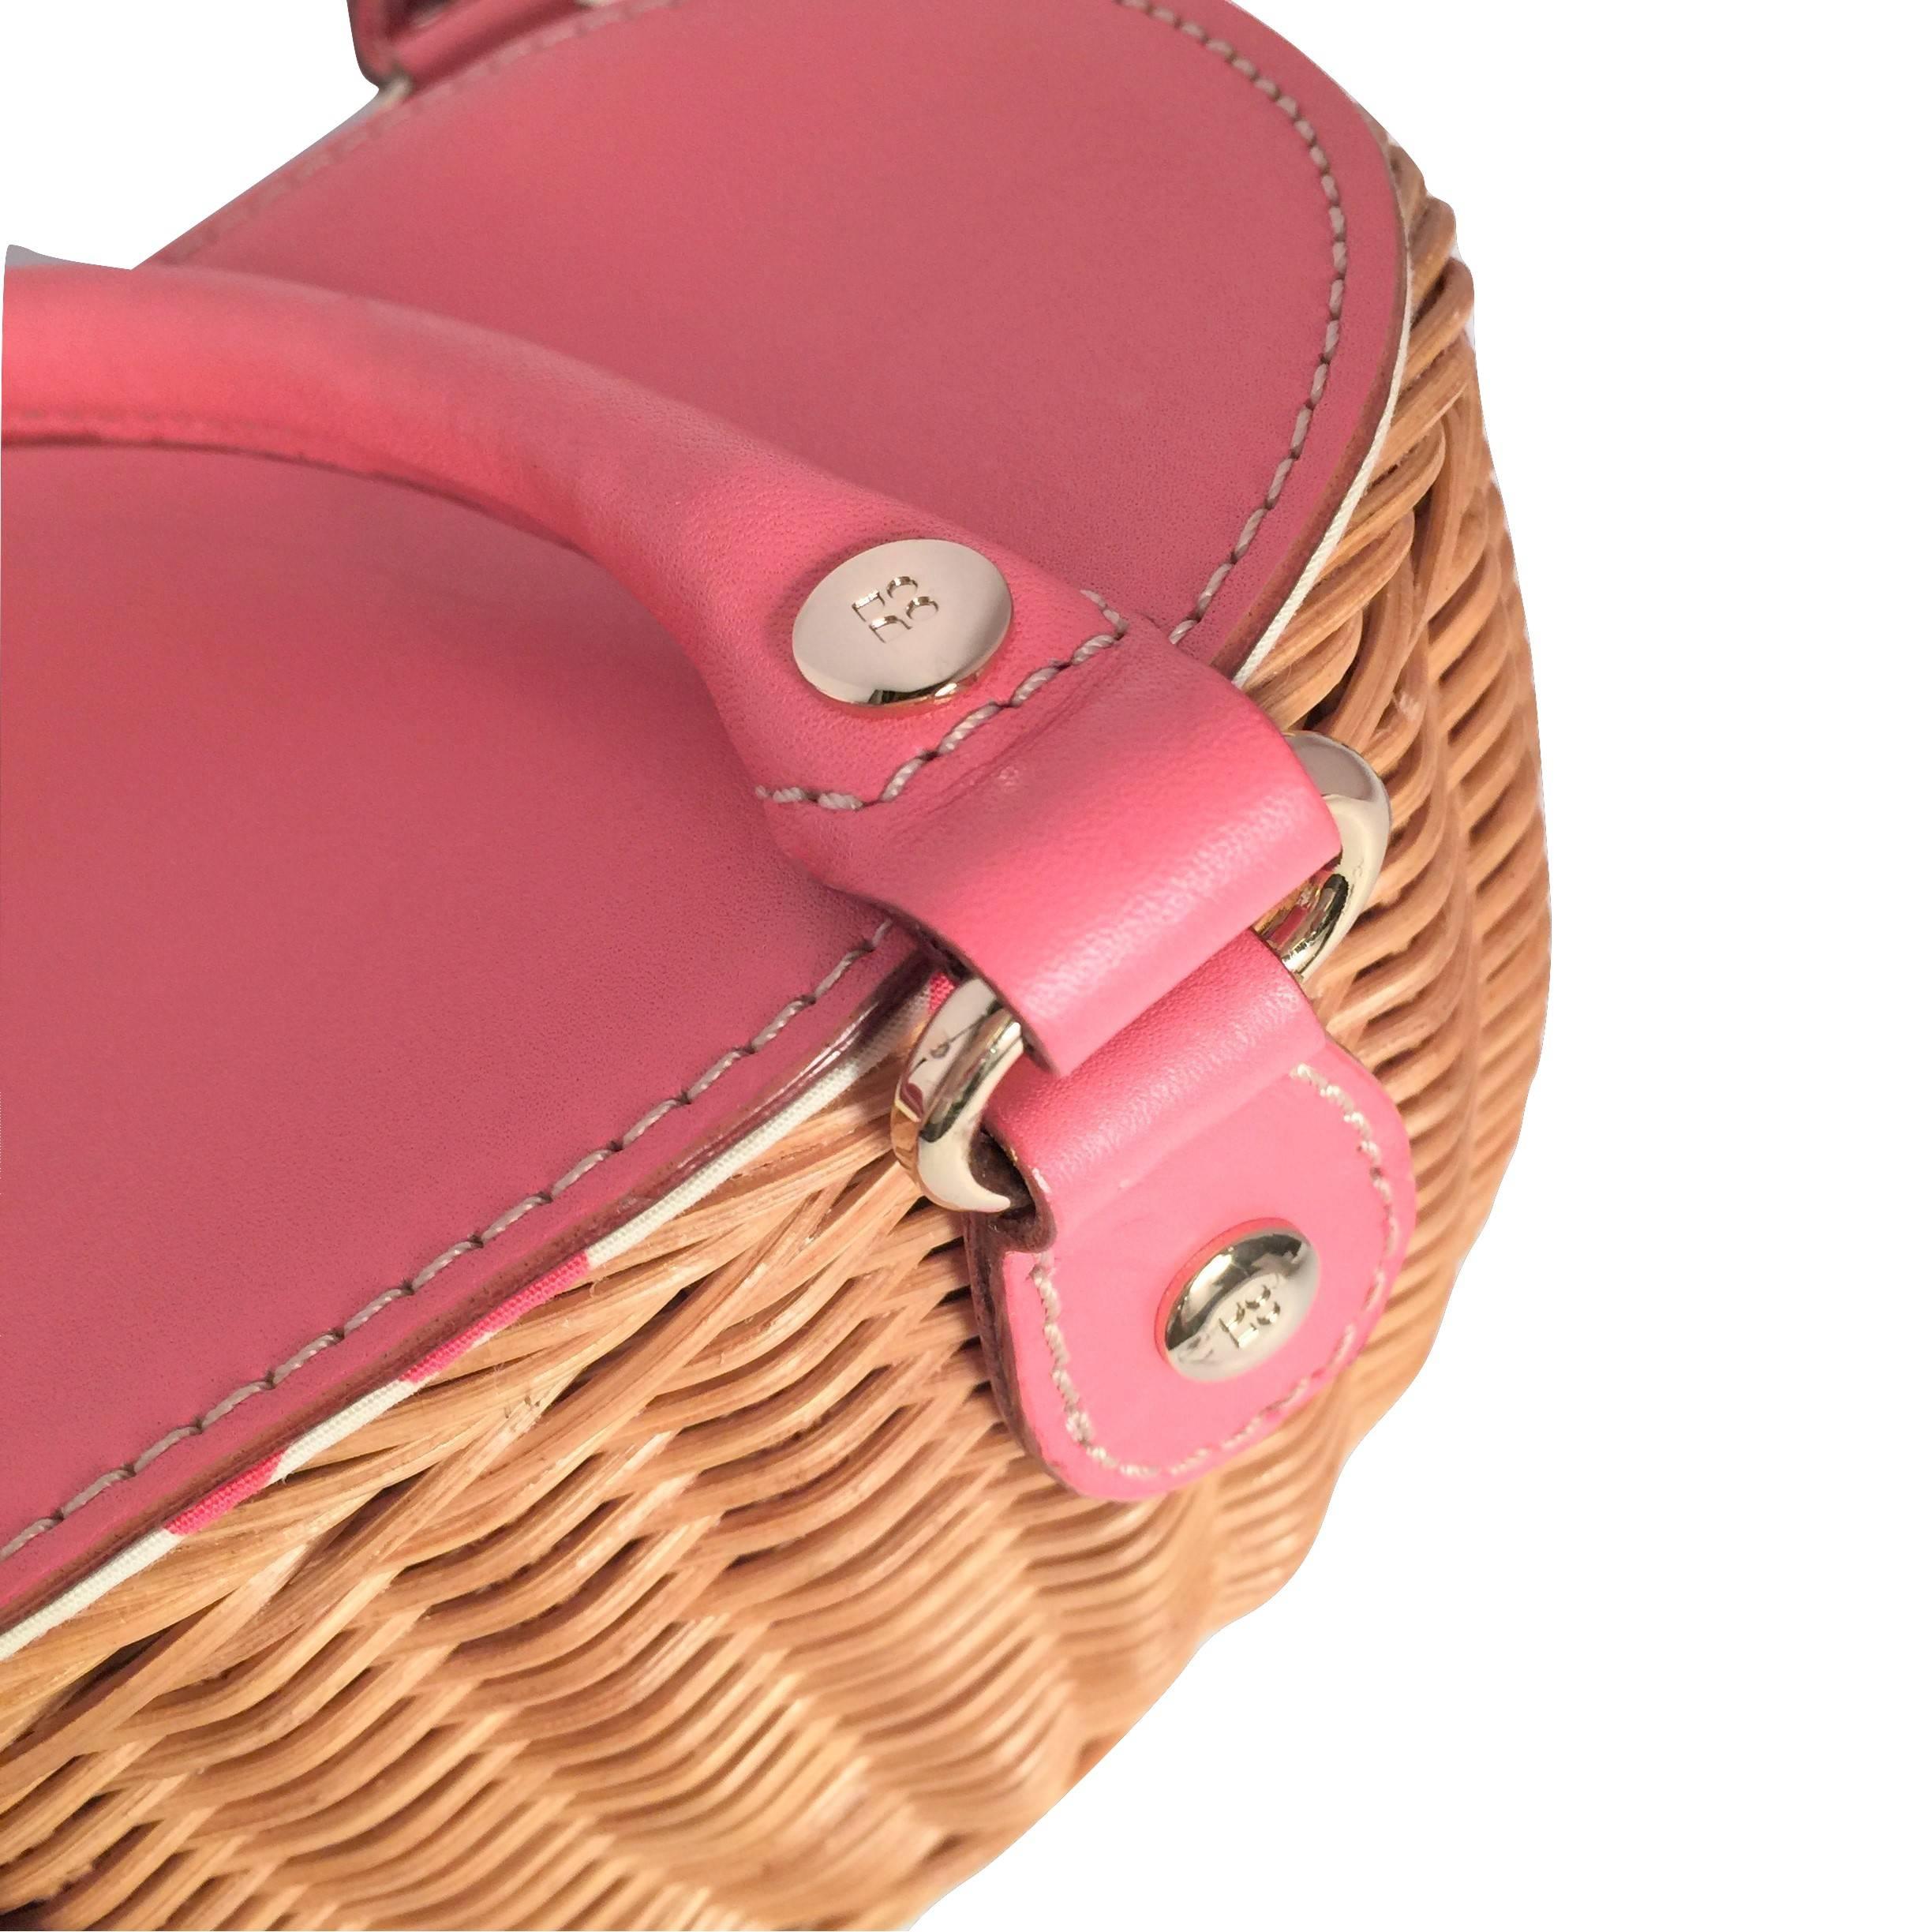 New Kate Spade Spring 2005 Collection Pink Wicker Basket Bag 2